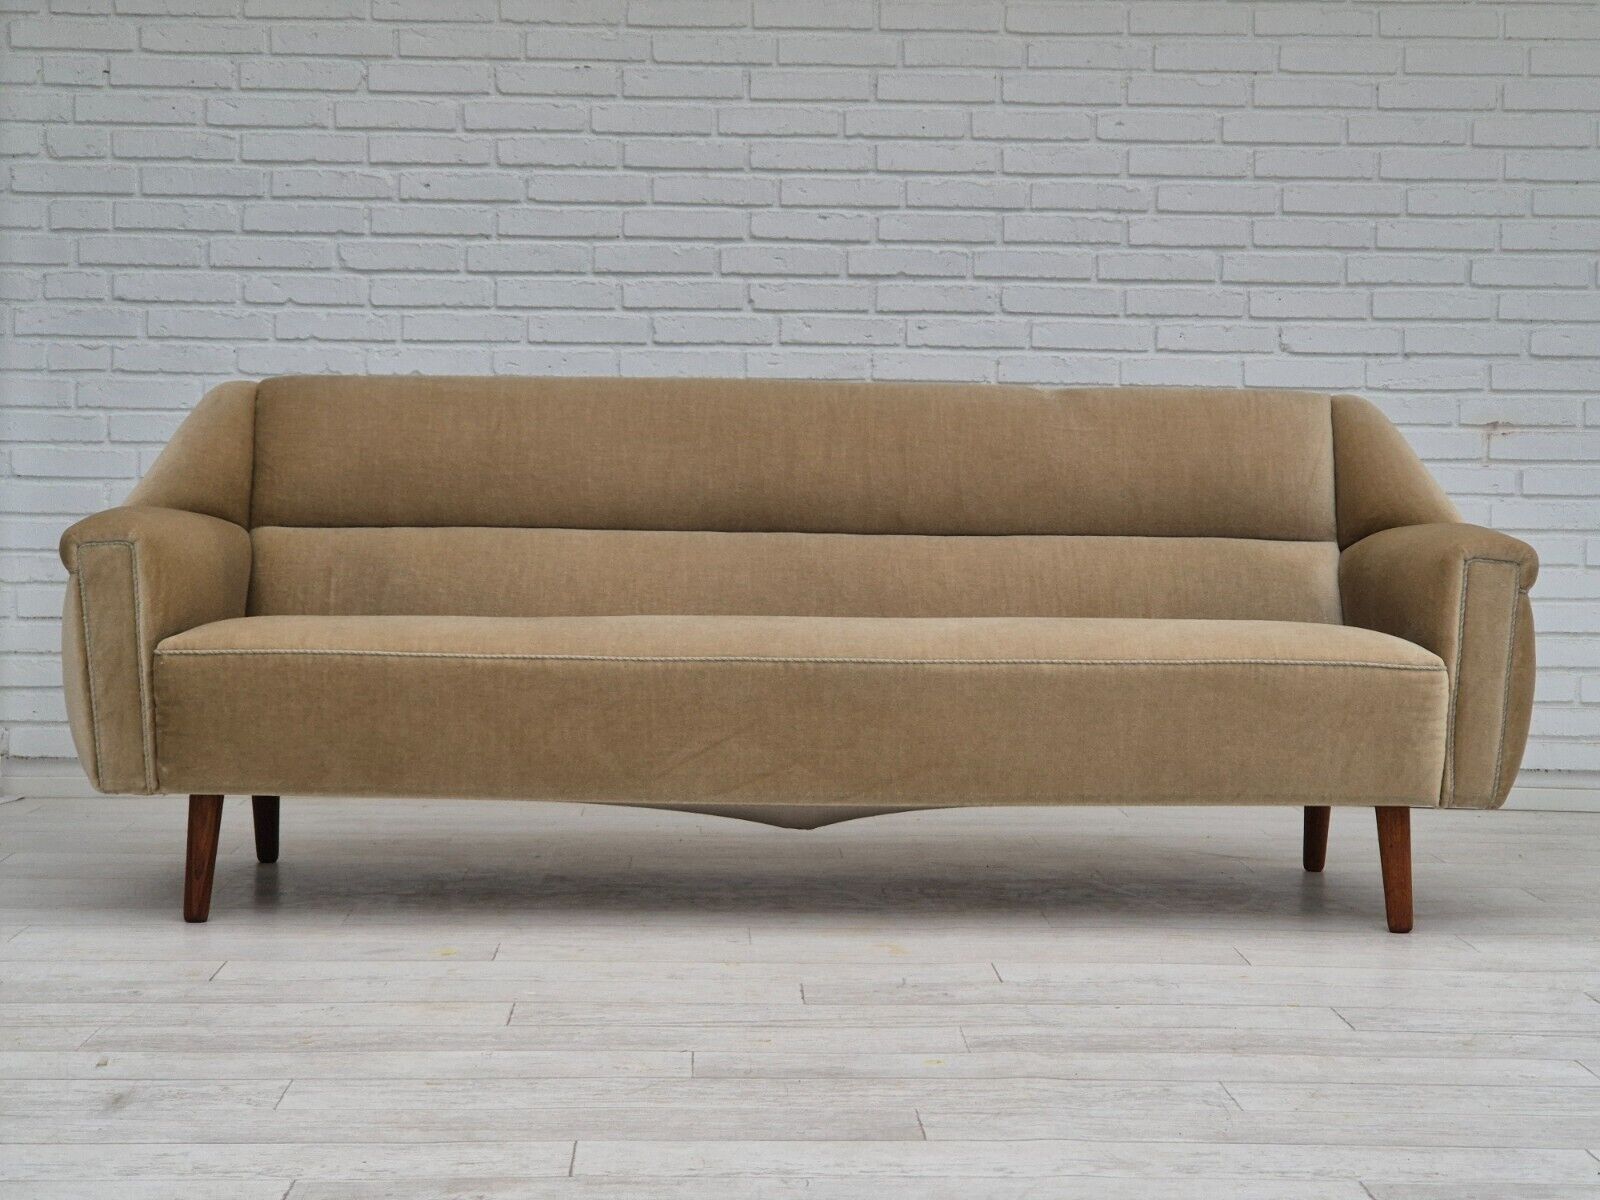 1960s Danish design by Kurt Østervig for Rolschau Møbler 3 seater sofa